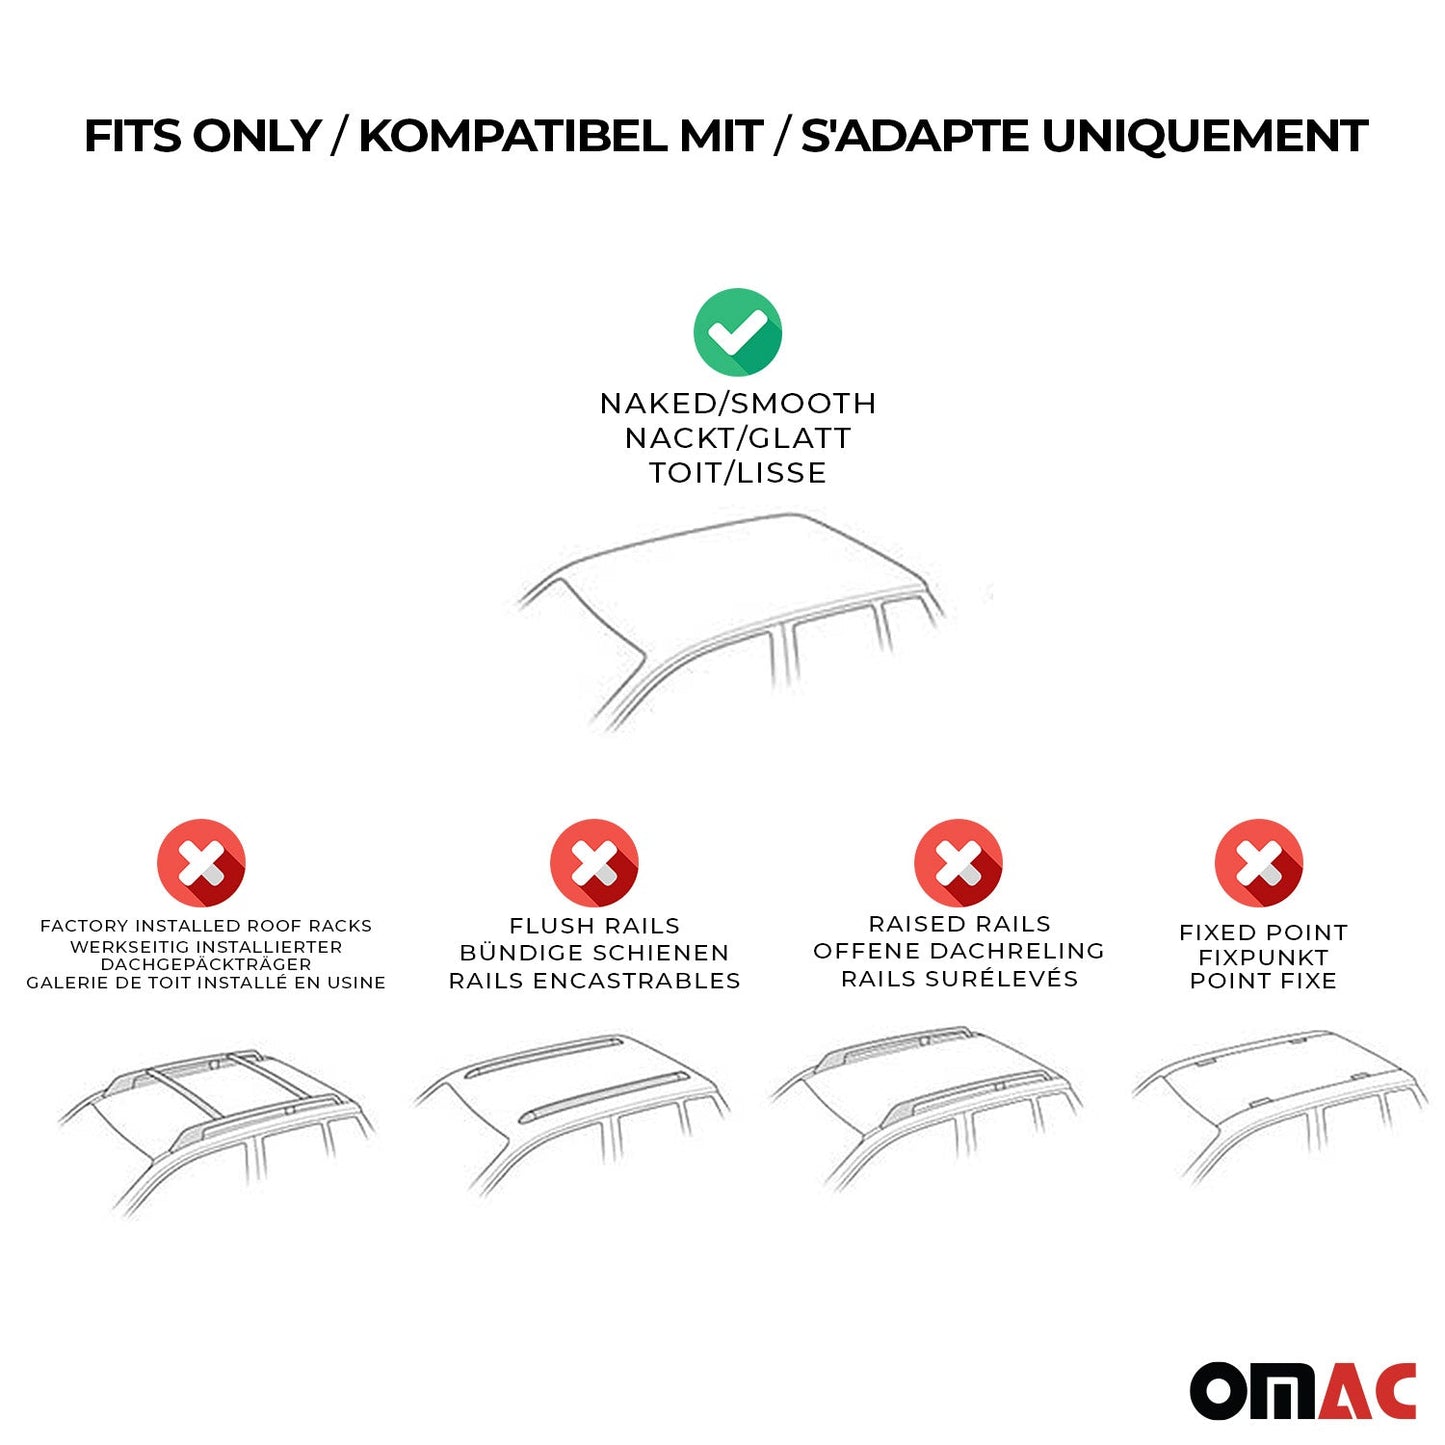 OMAC Smooth Roof Racks Cross Bars Carrier for Hyundai Sonata 2011-2014 Black 2Pcs G003113